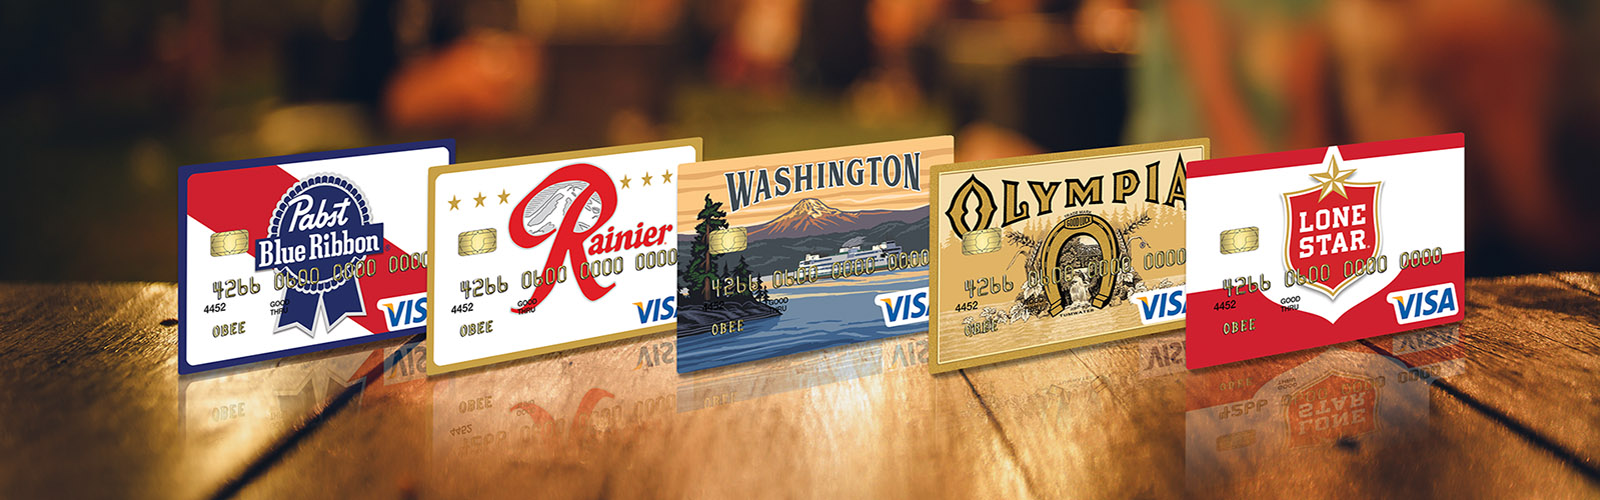 Credit cards with rewards and cash back. PBR Pabst Blue Ribbon visa card. Visa with Rainier beer logo. Washington state Visa card. Olympia Brewery Visa card. Lone Star Visa card.